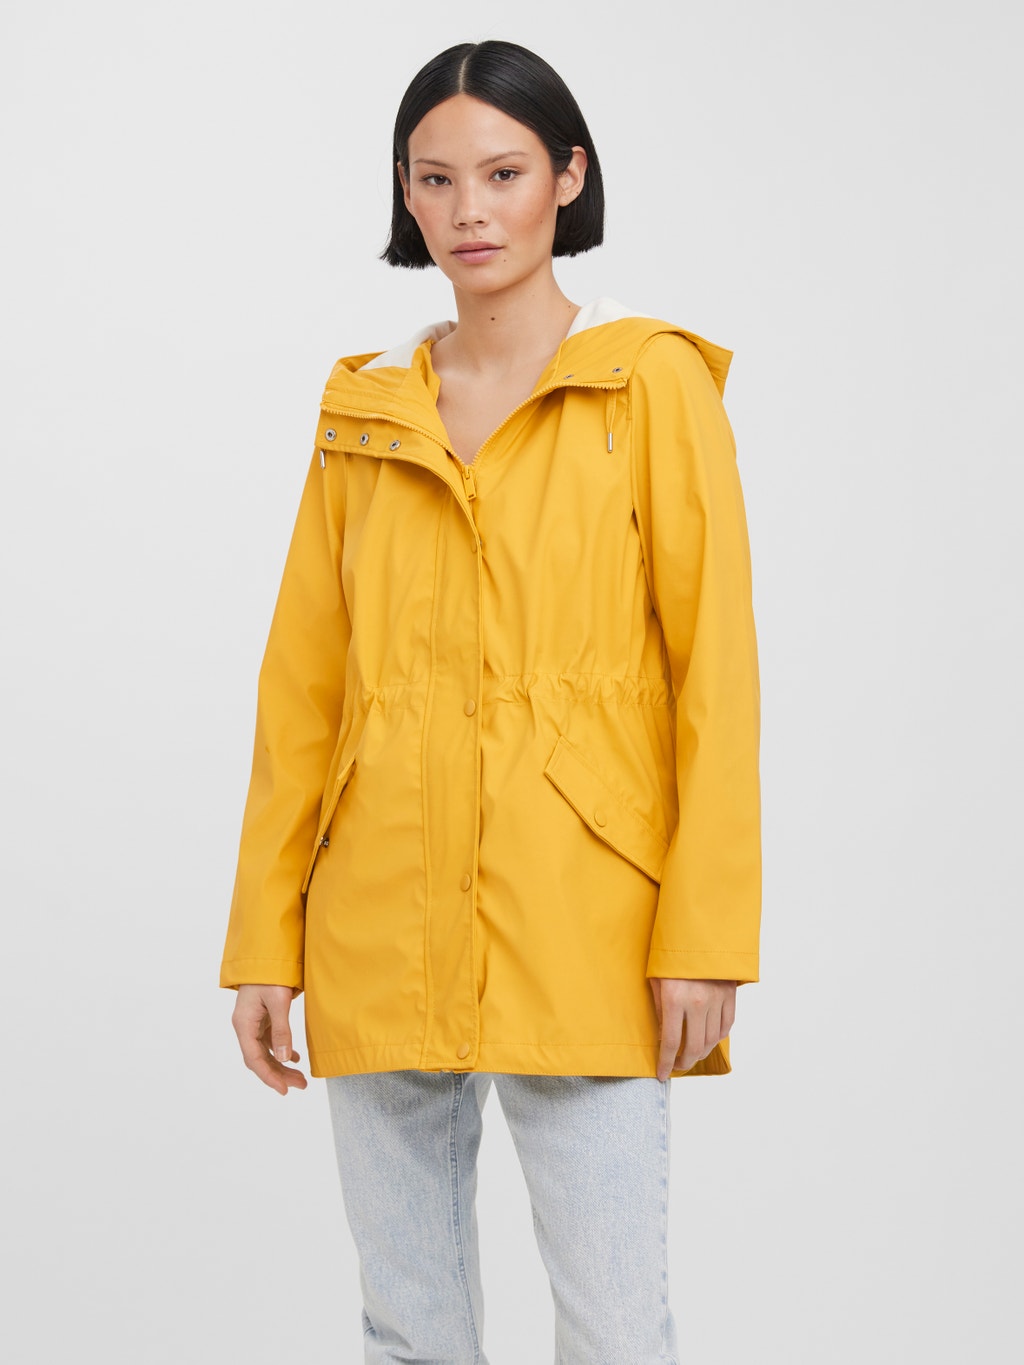 Derved entanglement Borger rain jacket | Medium Yellow | Vero Moda®